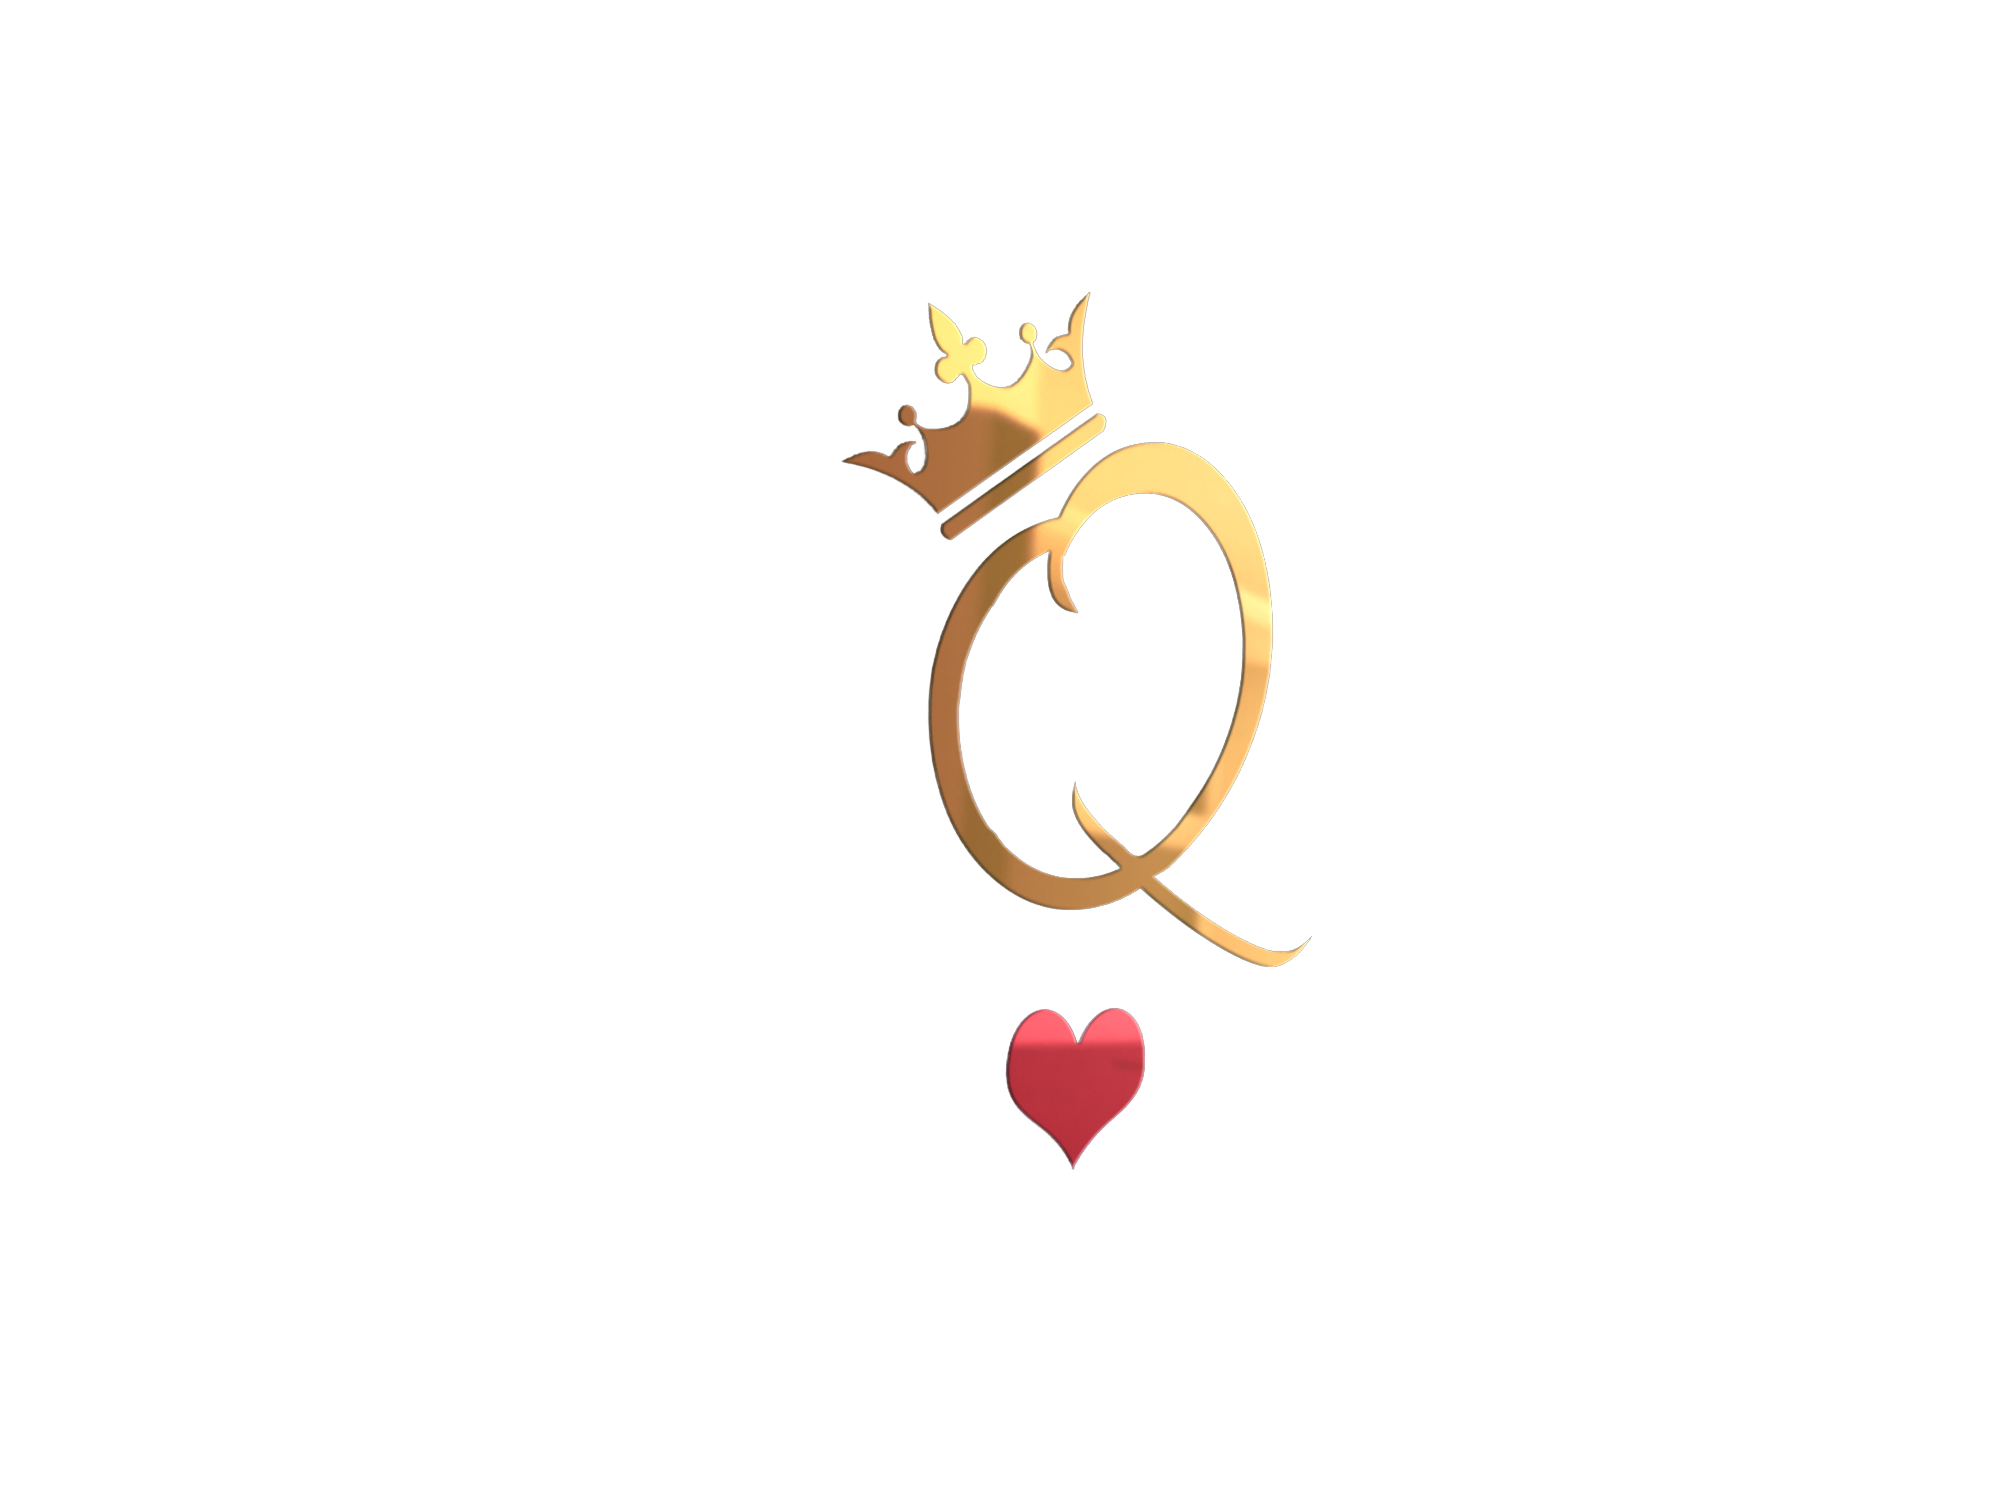 Queen of Hearts Club